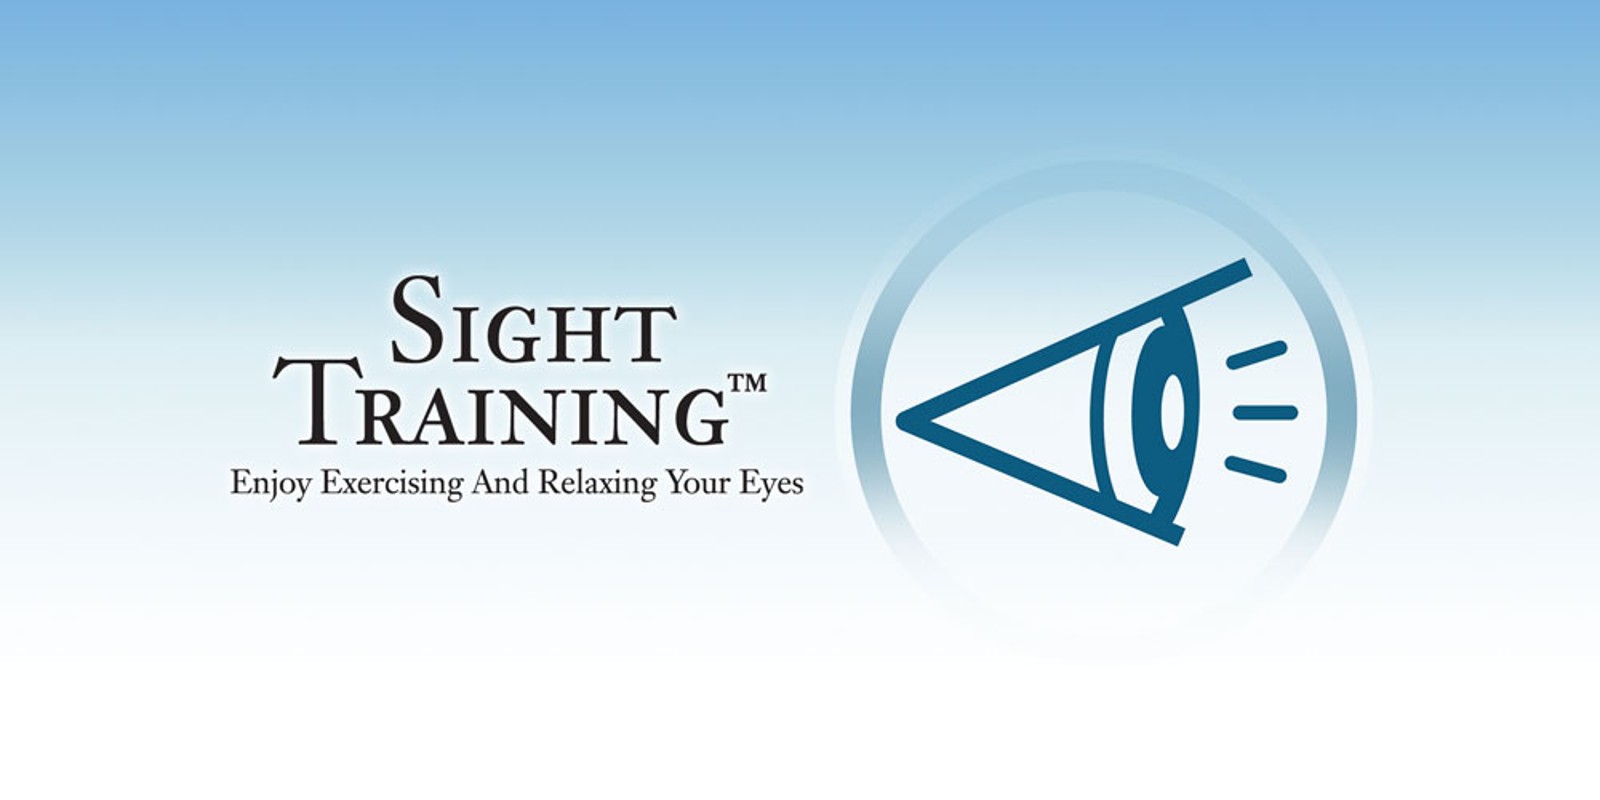 Sight Training: Enjoy Exercising and Relaxing Your Eyes